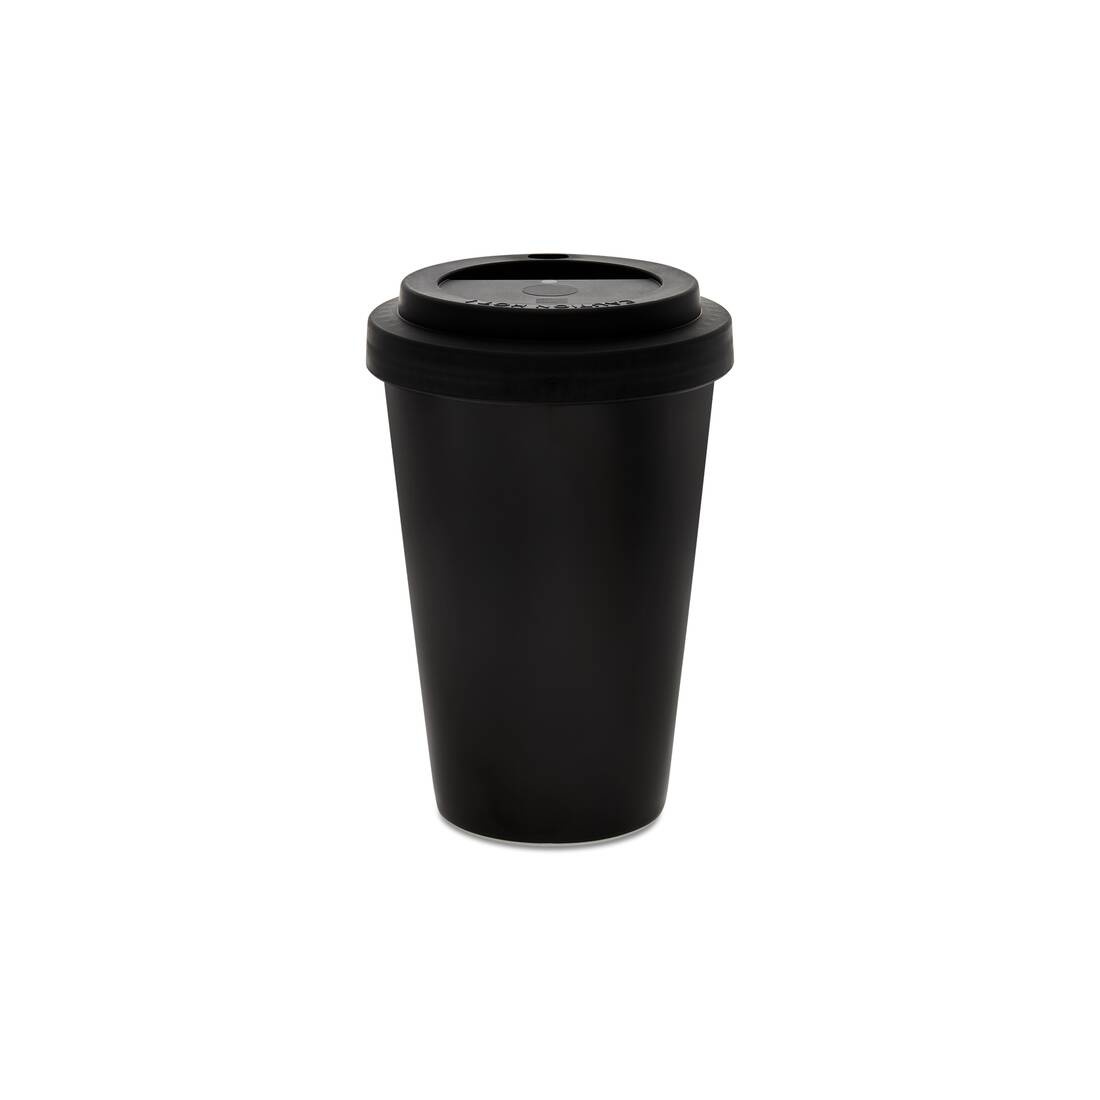 Miami Coffee Cup in Black - 2